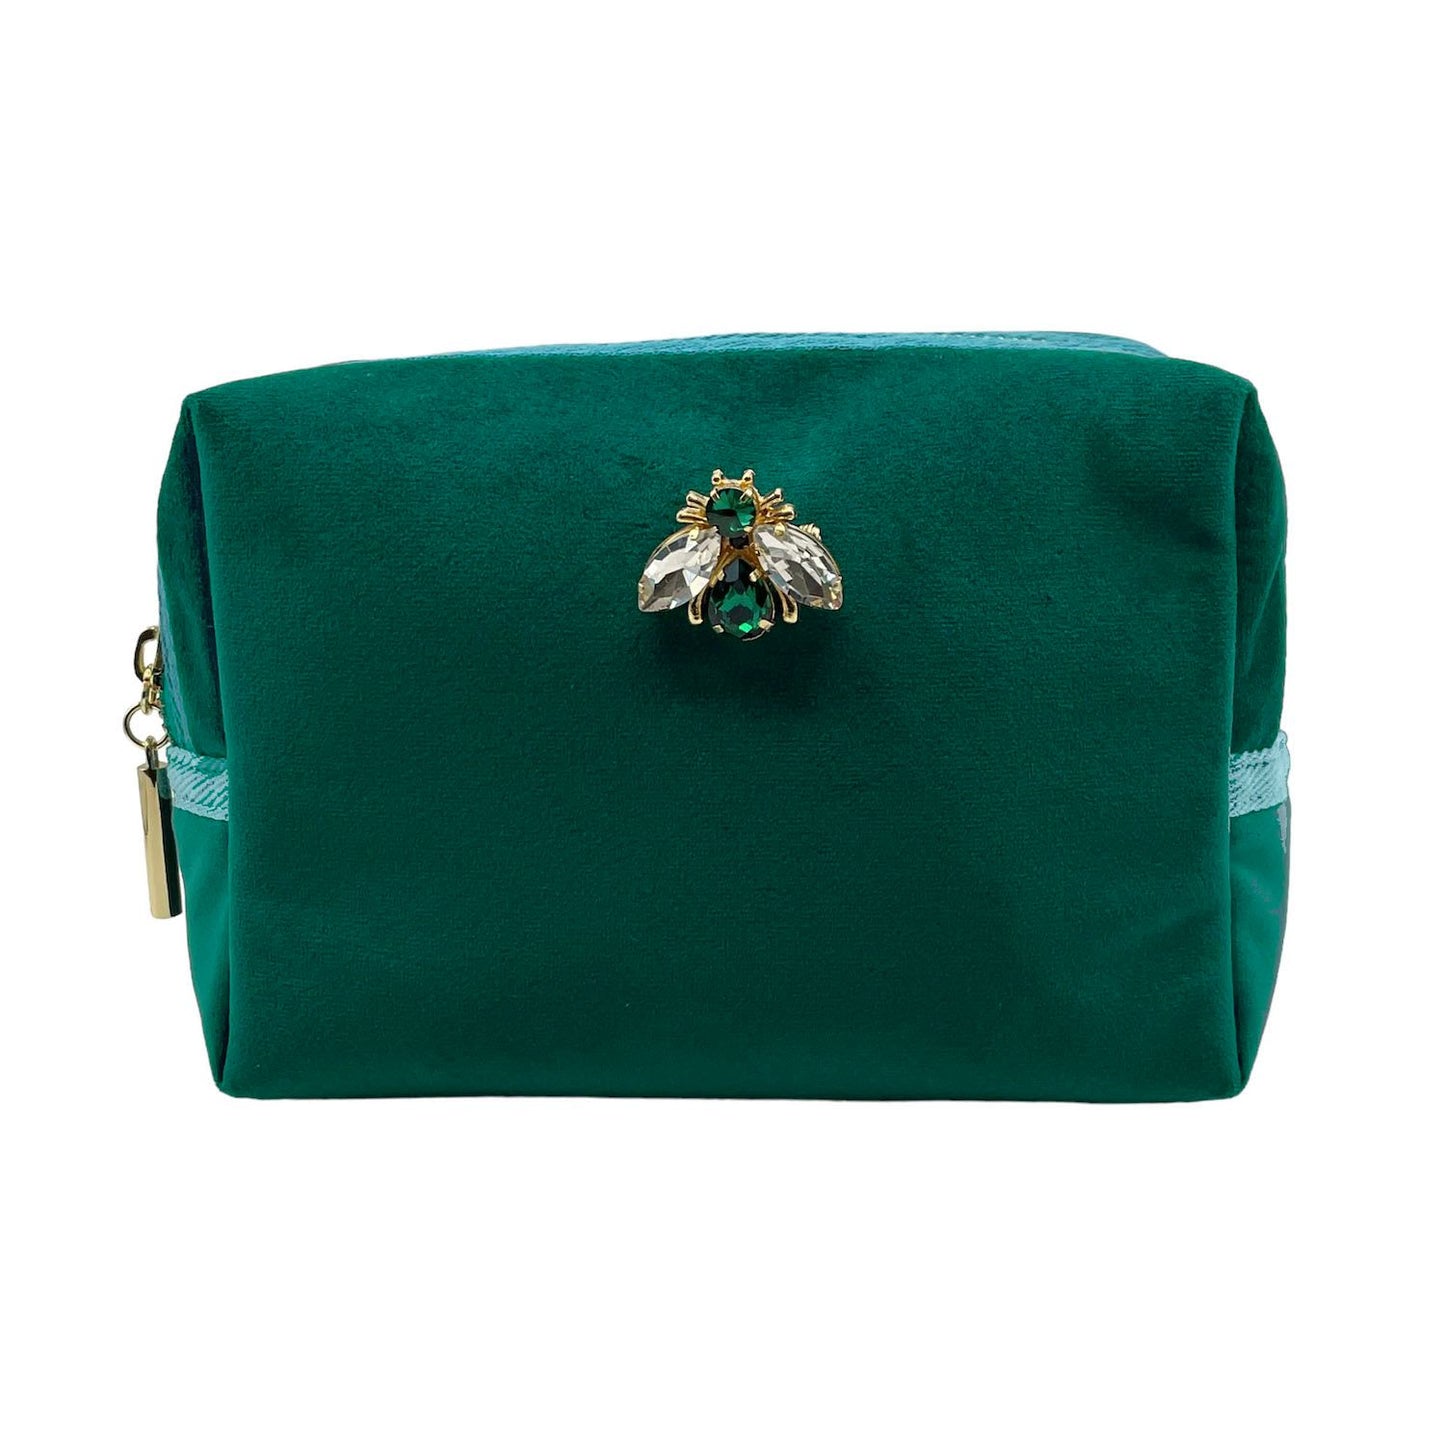 Copy of Green make-up bag & luna pin - recycled velvet